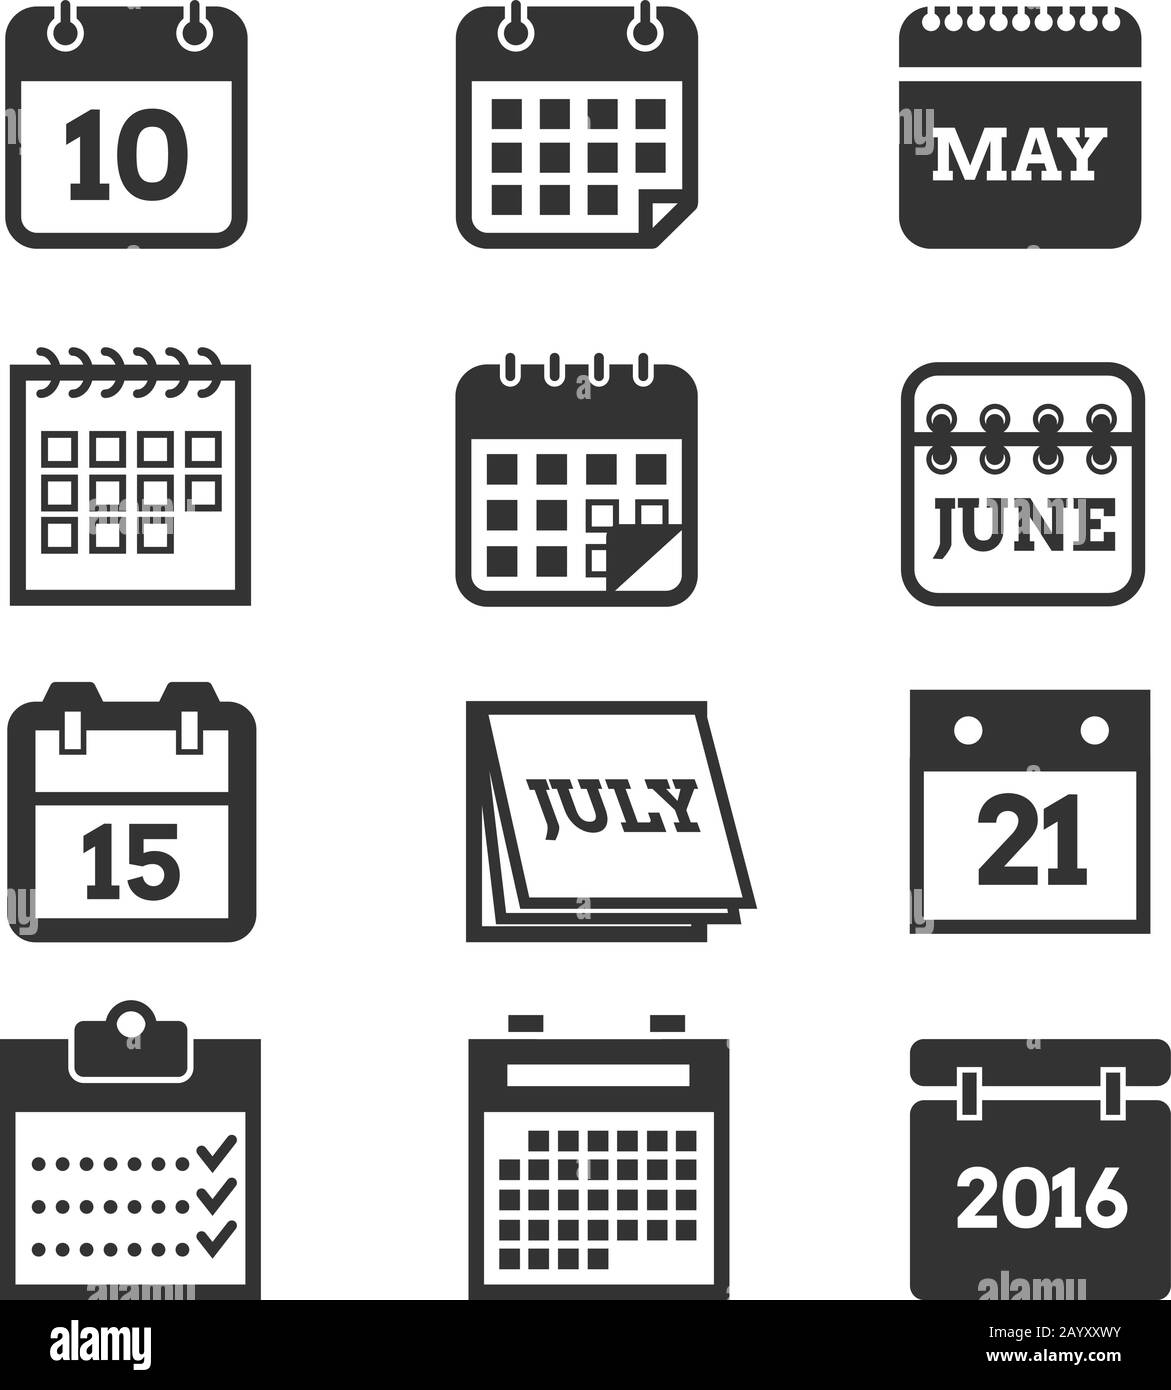 Calendar vector icons set. Calendar page symbol and pictogram illustration calendars of element Stock Vector